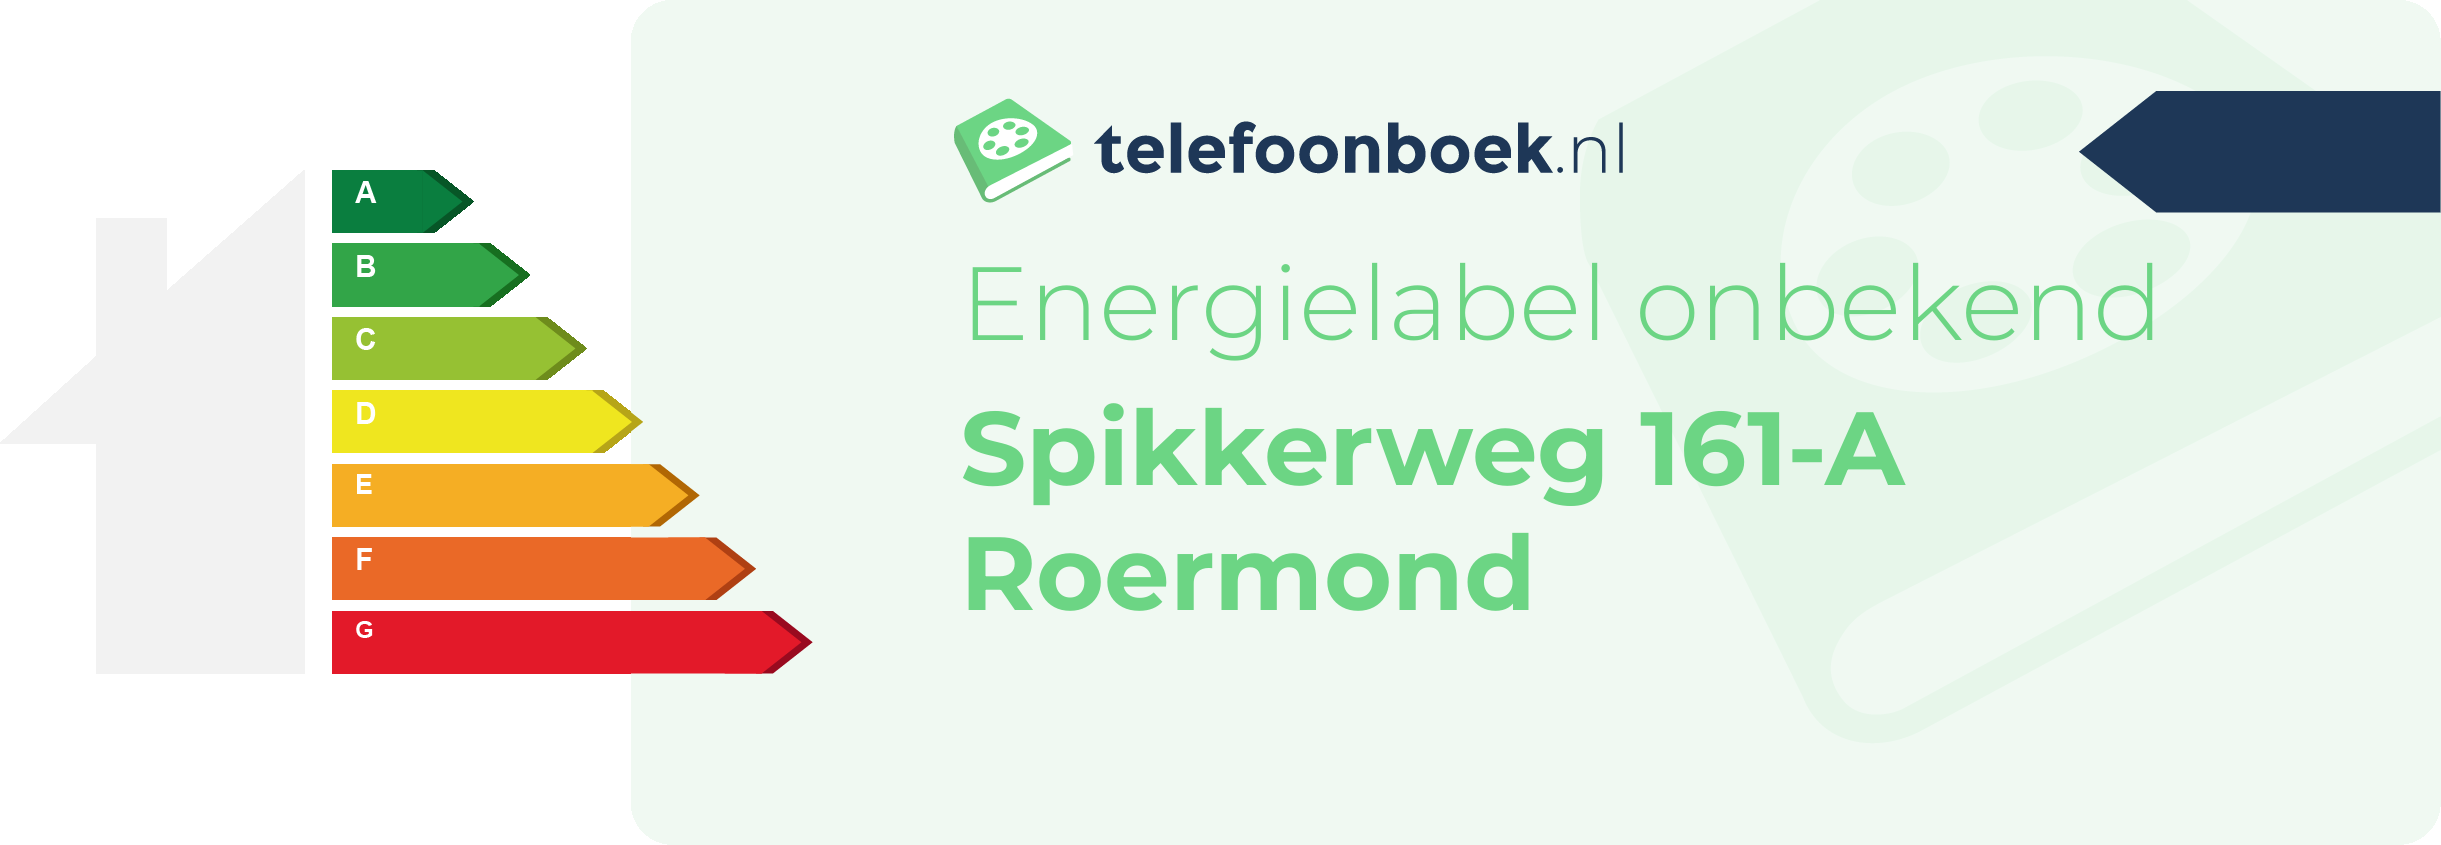 Energielabel Spikkerweg 161-A Roermond